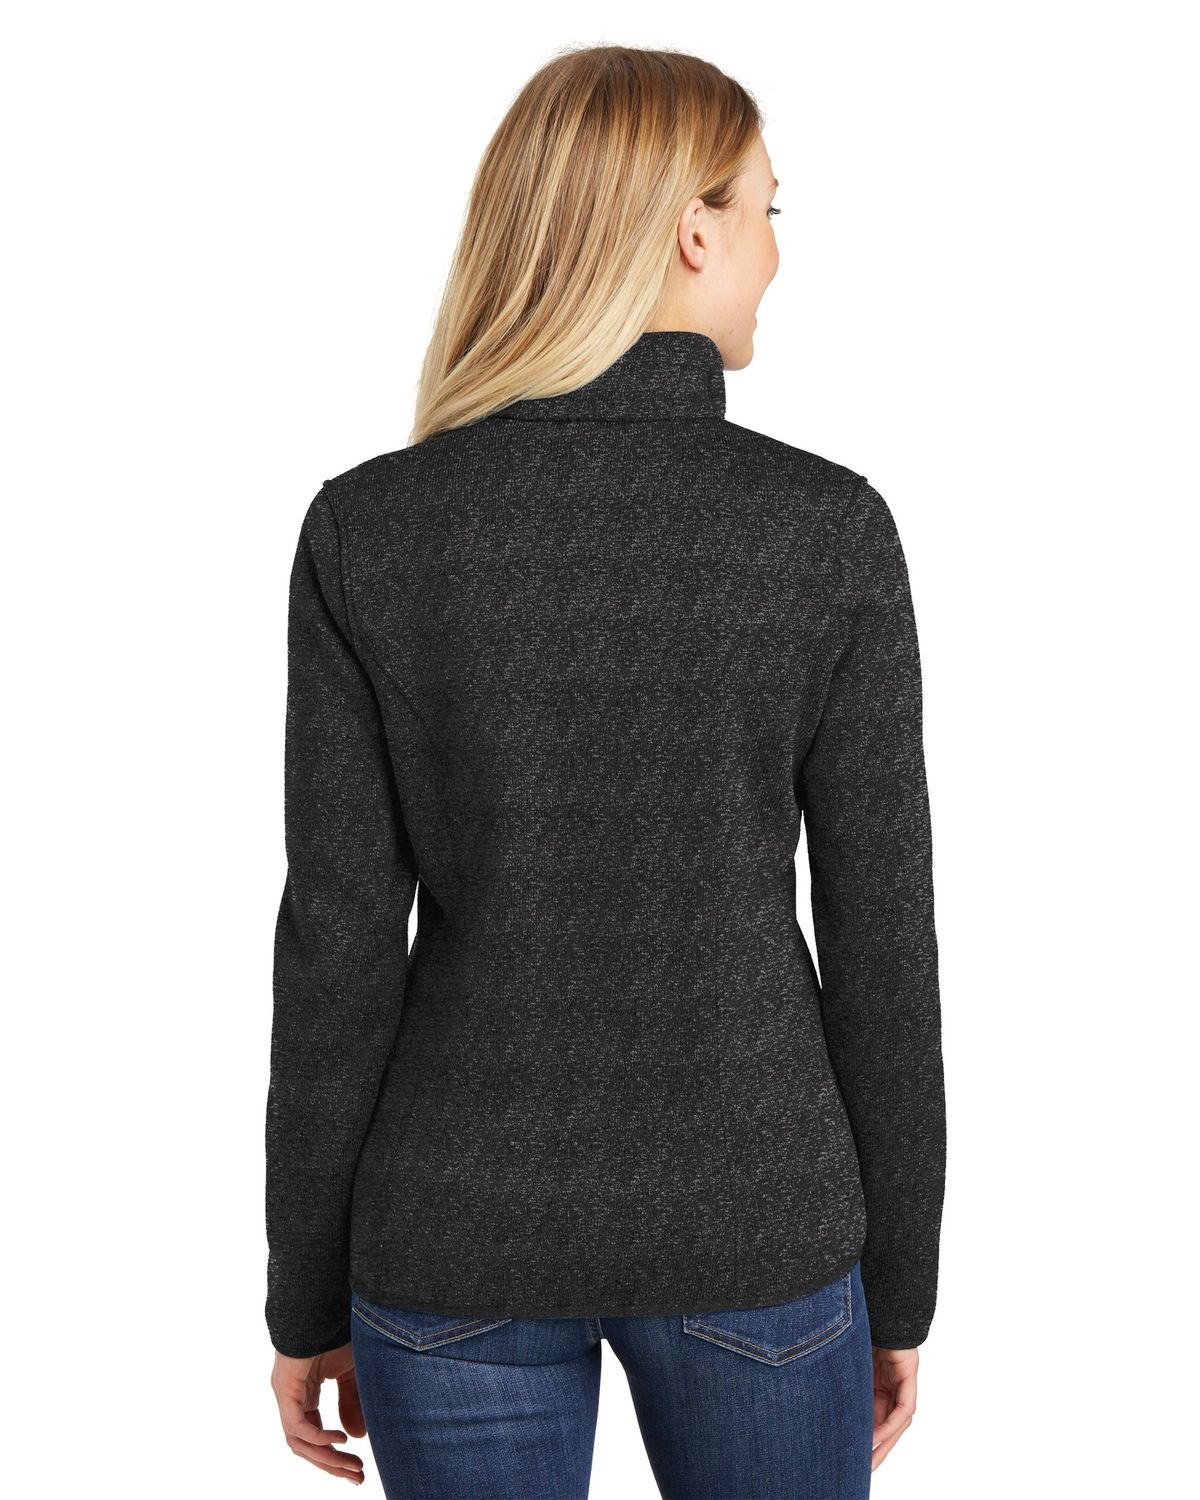 'Port Authority L232 Ladies Sweater Fleece Jacket'